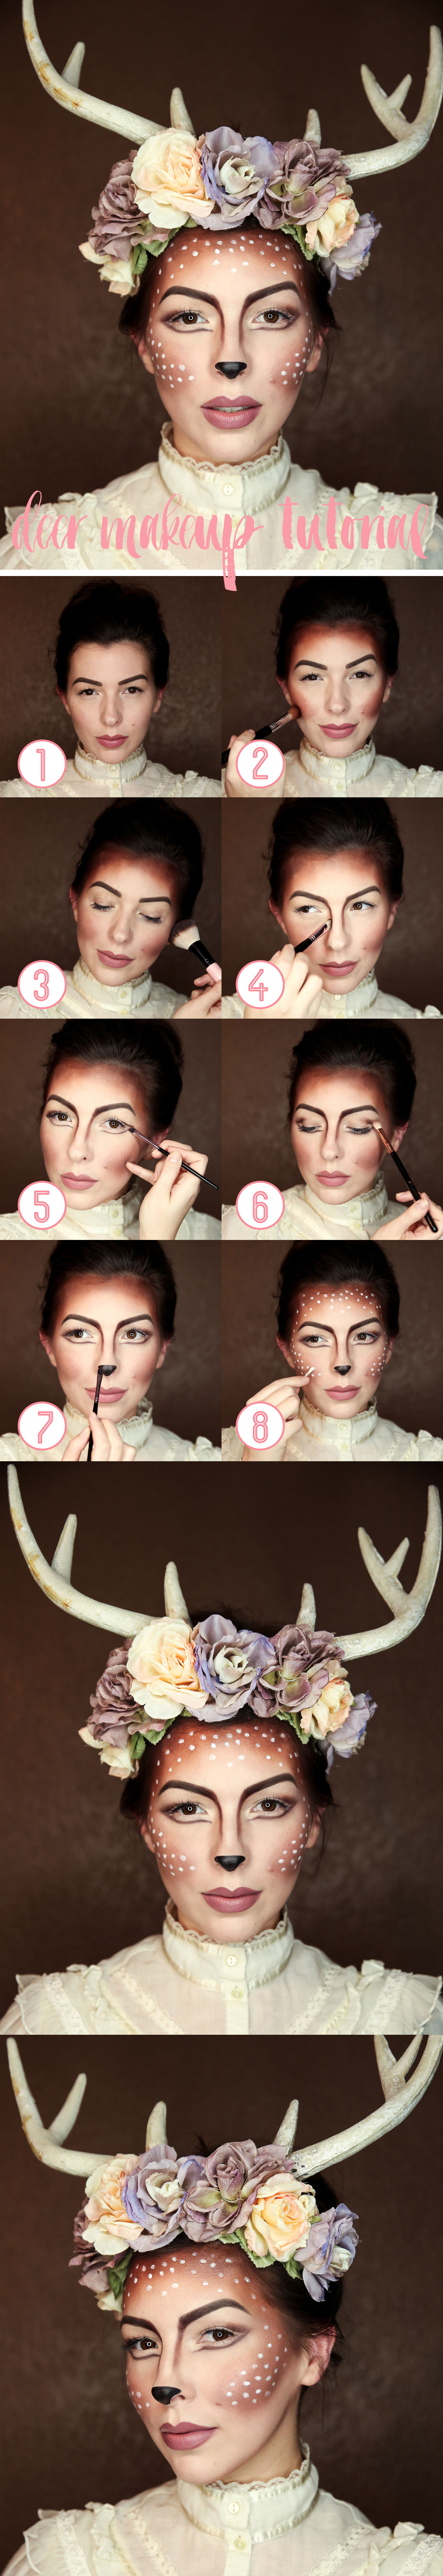 easy deer makeup tutorial for halloween, fawn makeup